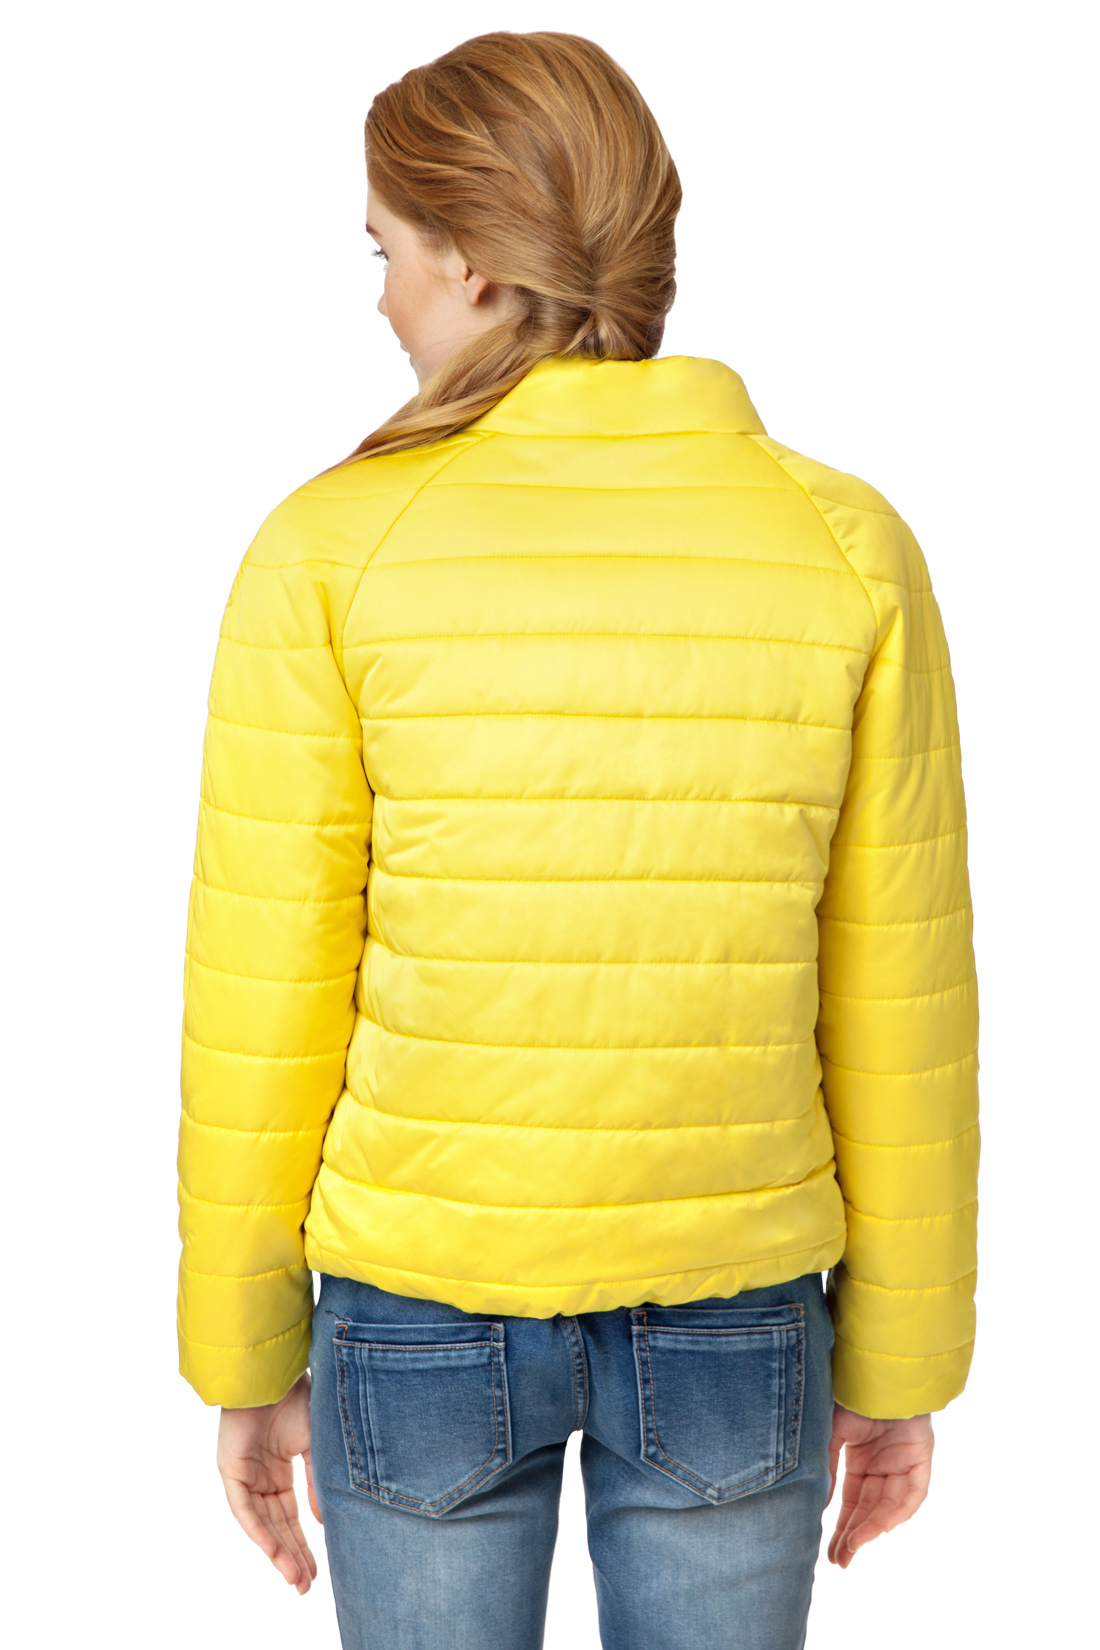 Куртка в спортивном стиле (арт. baon B037007), размер S, цвет желтый Куртка в спортивном стиле (арт. baon B037007) - фото 2